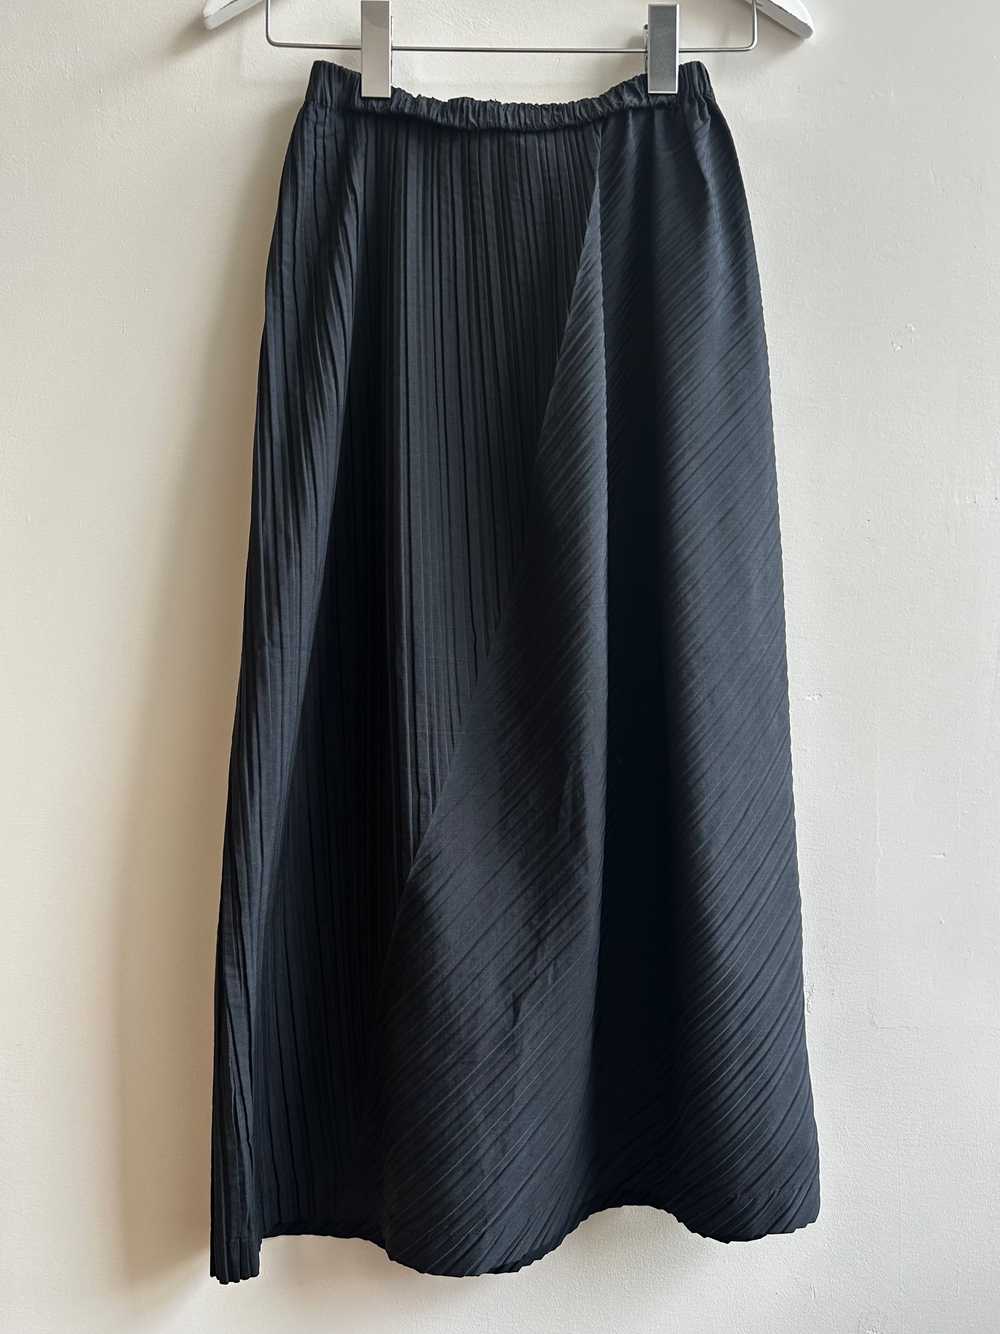 Vintage Issey Miyake Pleated Black Skirt Size Sma… - image 2